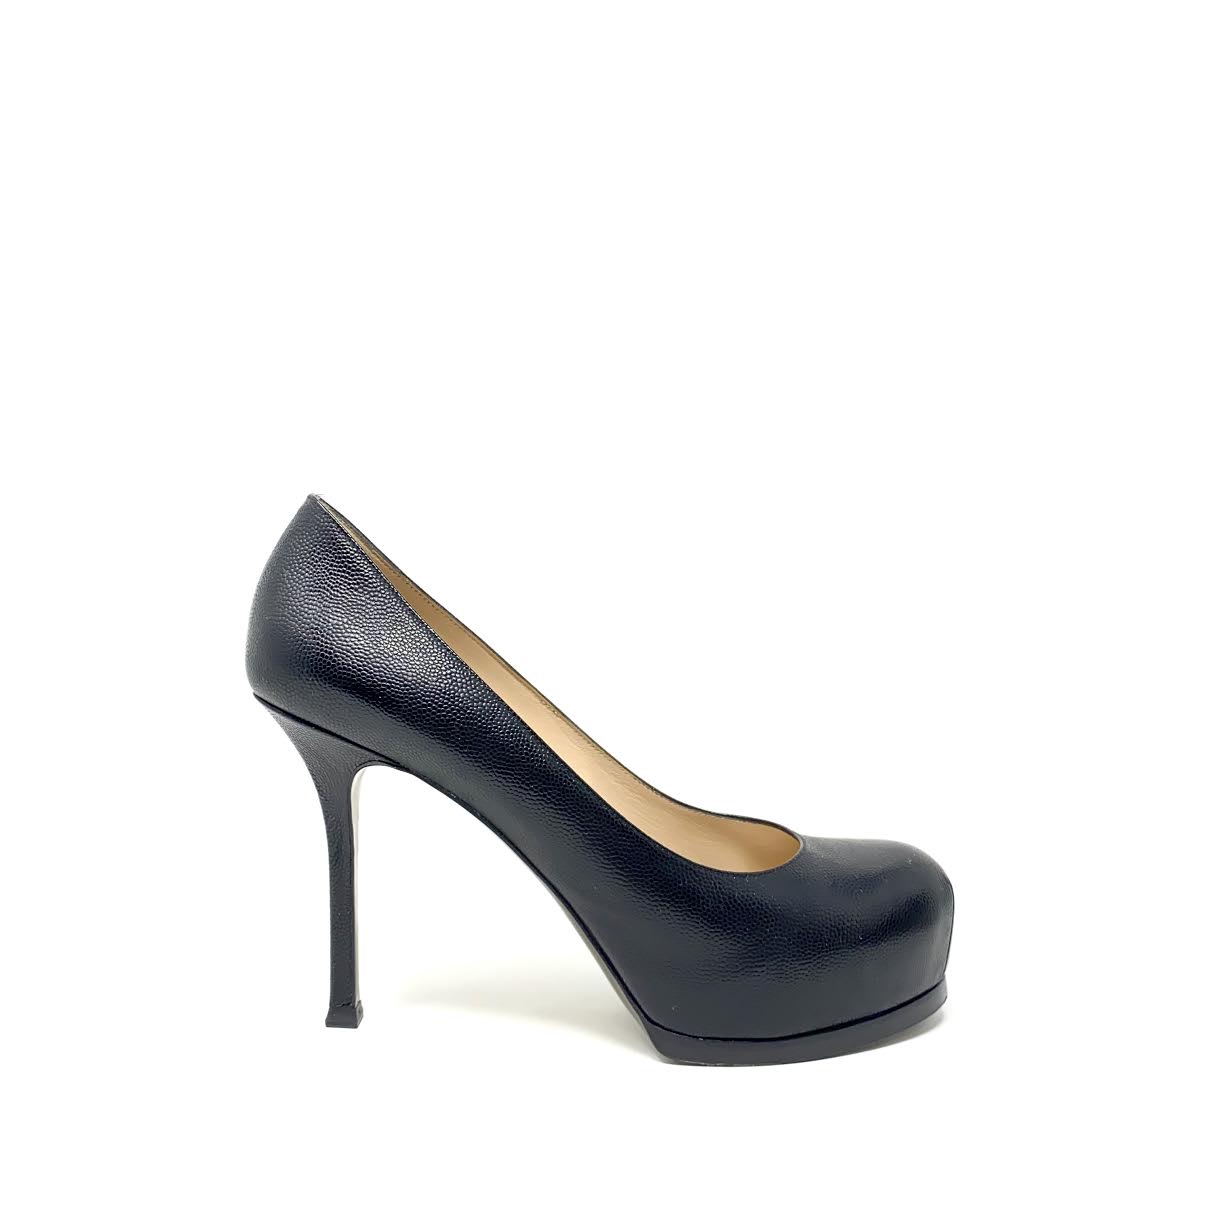 Black platform 6 inch high heel shoes - Super X Studio